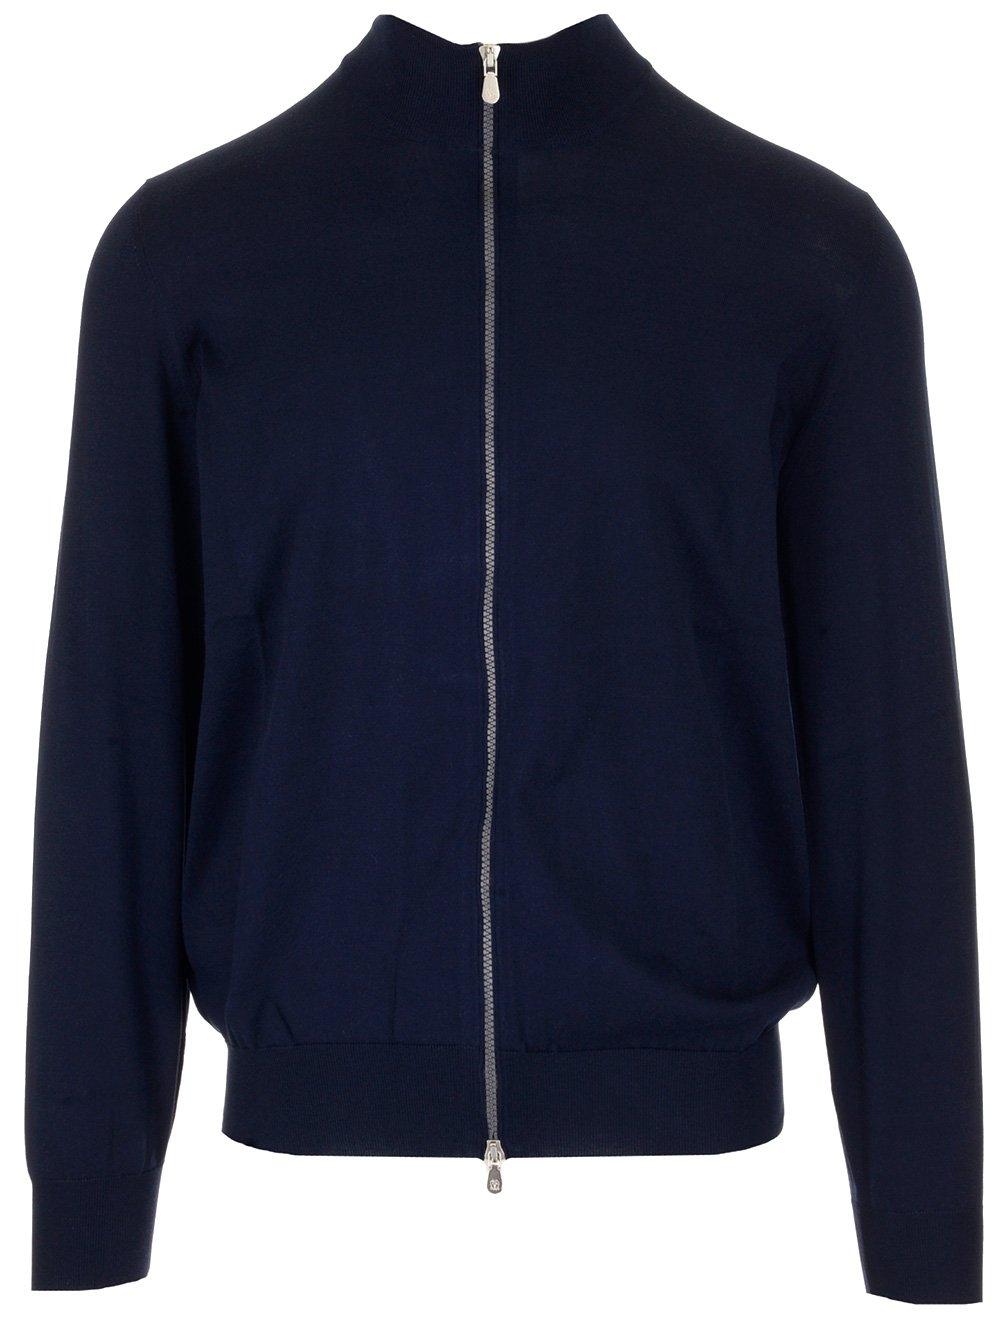 Brunello Cucinelli Cotton Zip-up Sweater in Blue for Men - Lyst